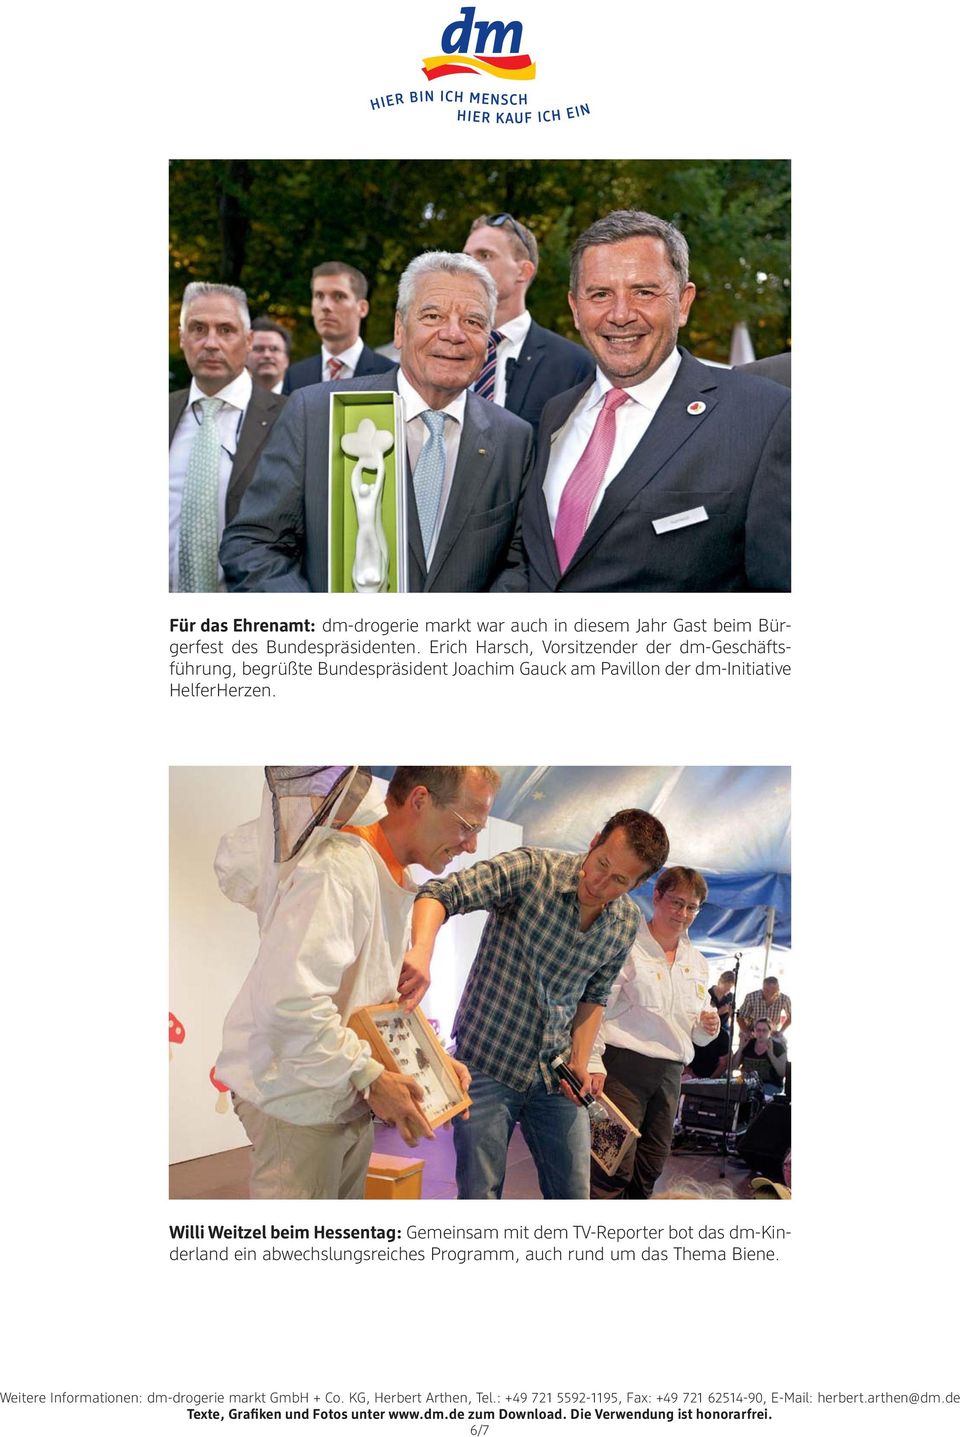 Erich Harsch, Vorsitzender der dm-geschäftsführung, begrüßte Bundespräsident Joachim Gauck am